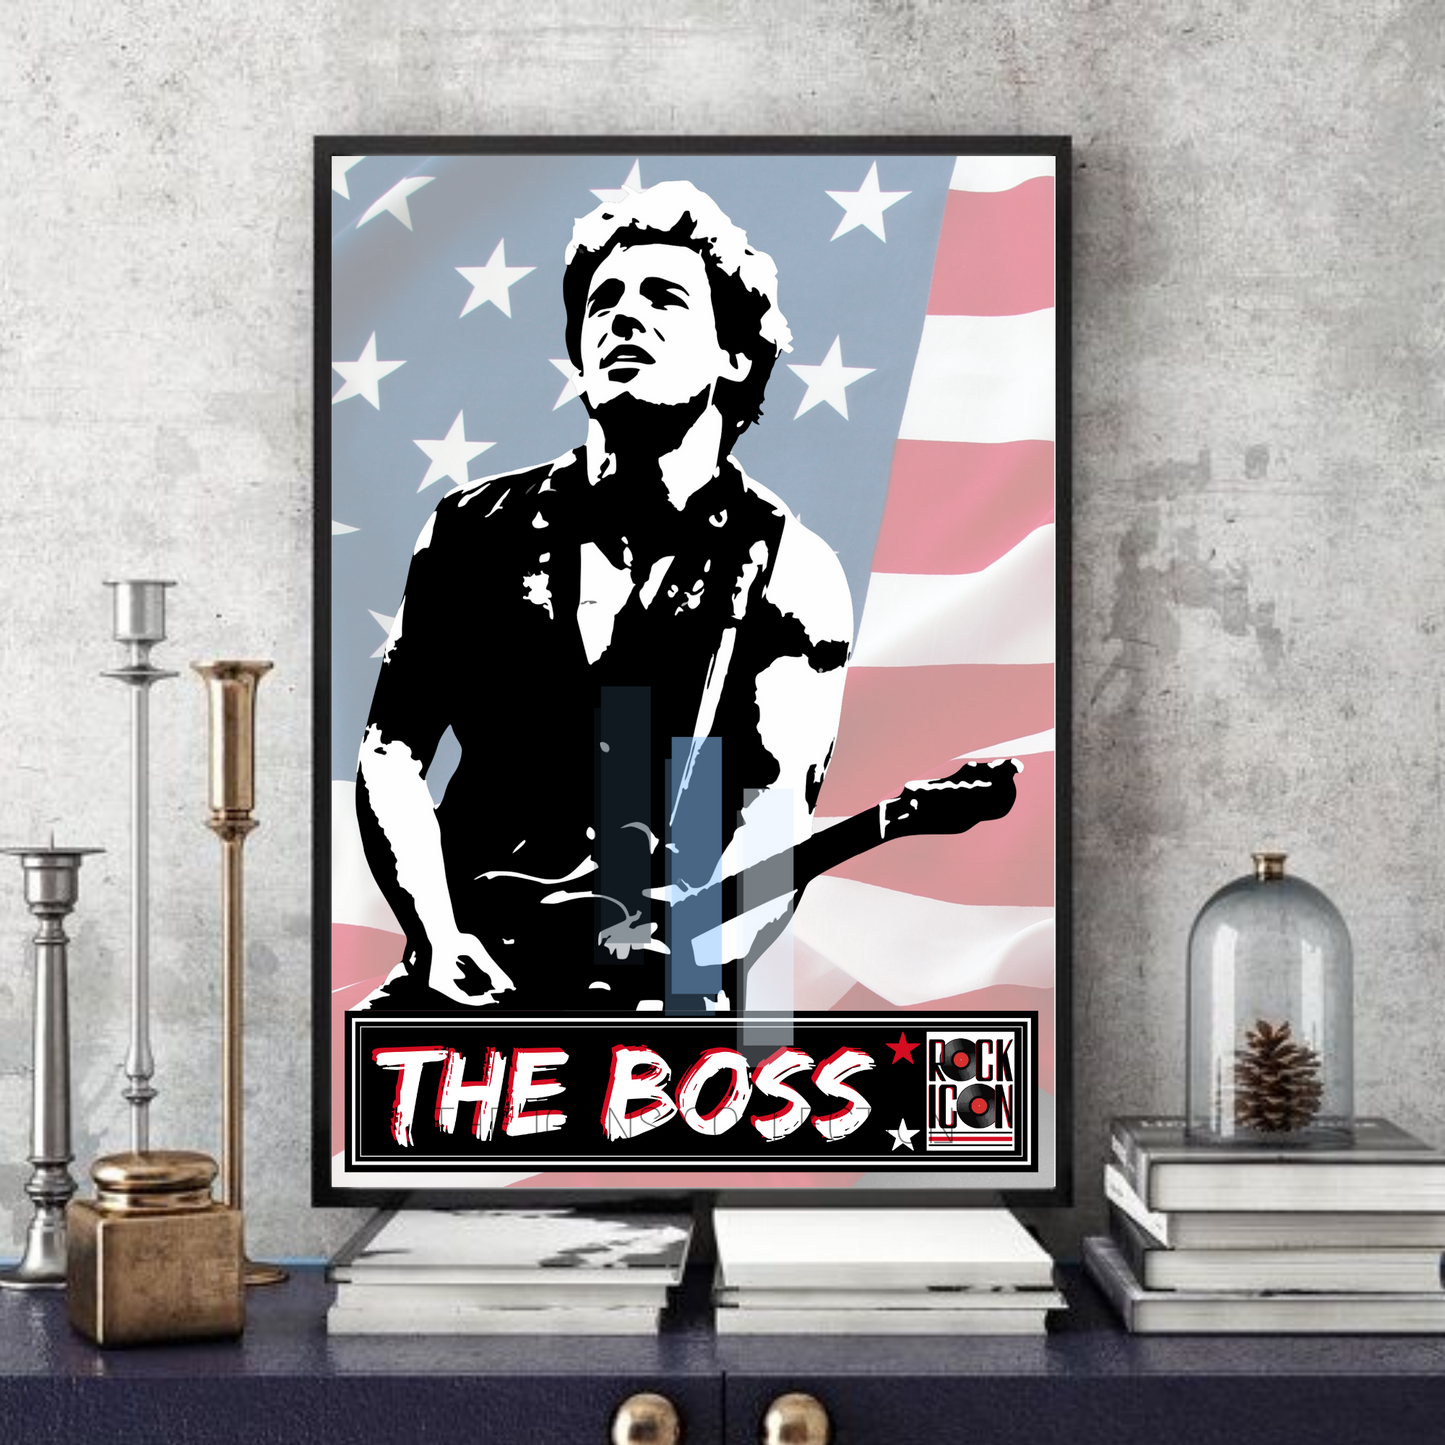 Bruce Springsteen/The Boss v4 - Pop Art